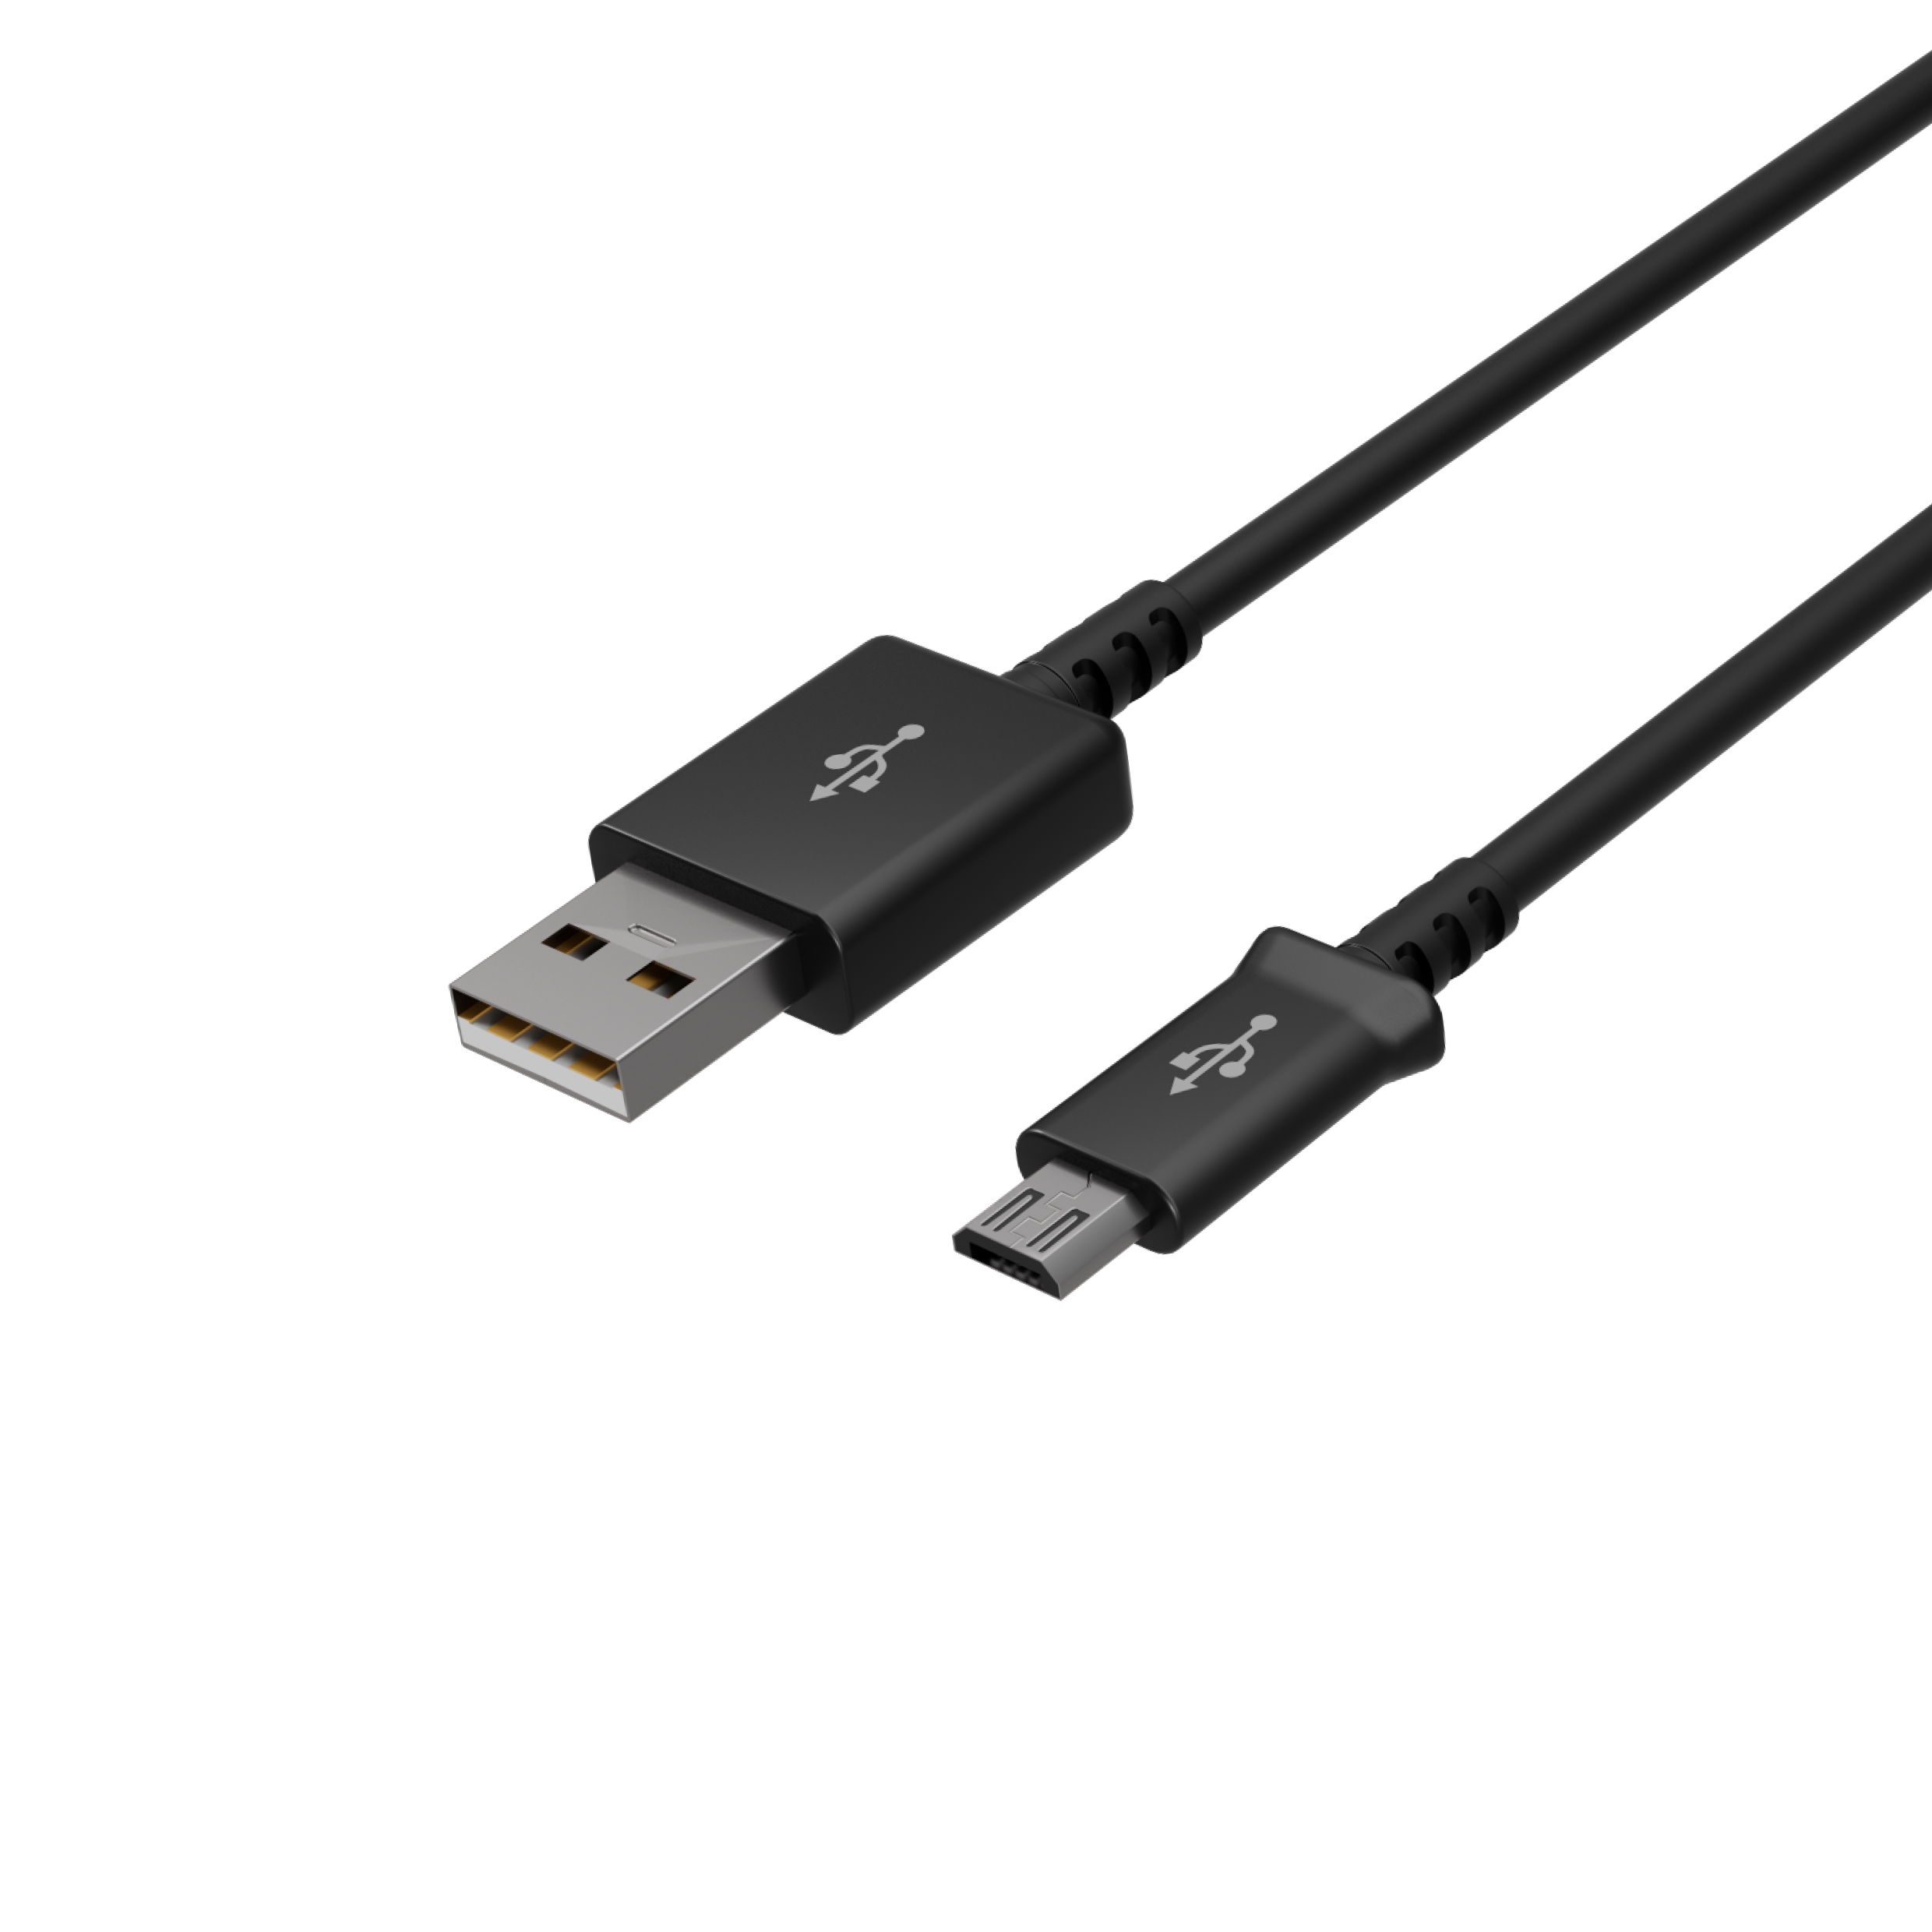 auf A Kabel USB-Ladekabel, USB USB-micro 1m FLEXLINE B Stecker